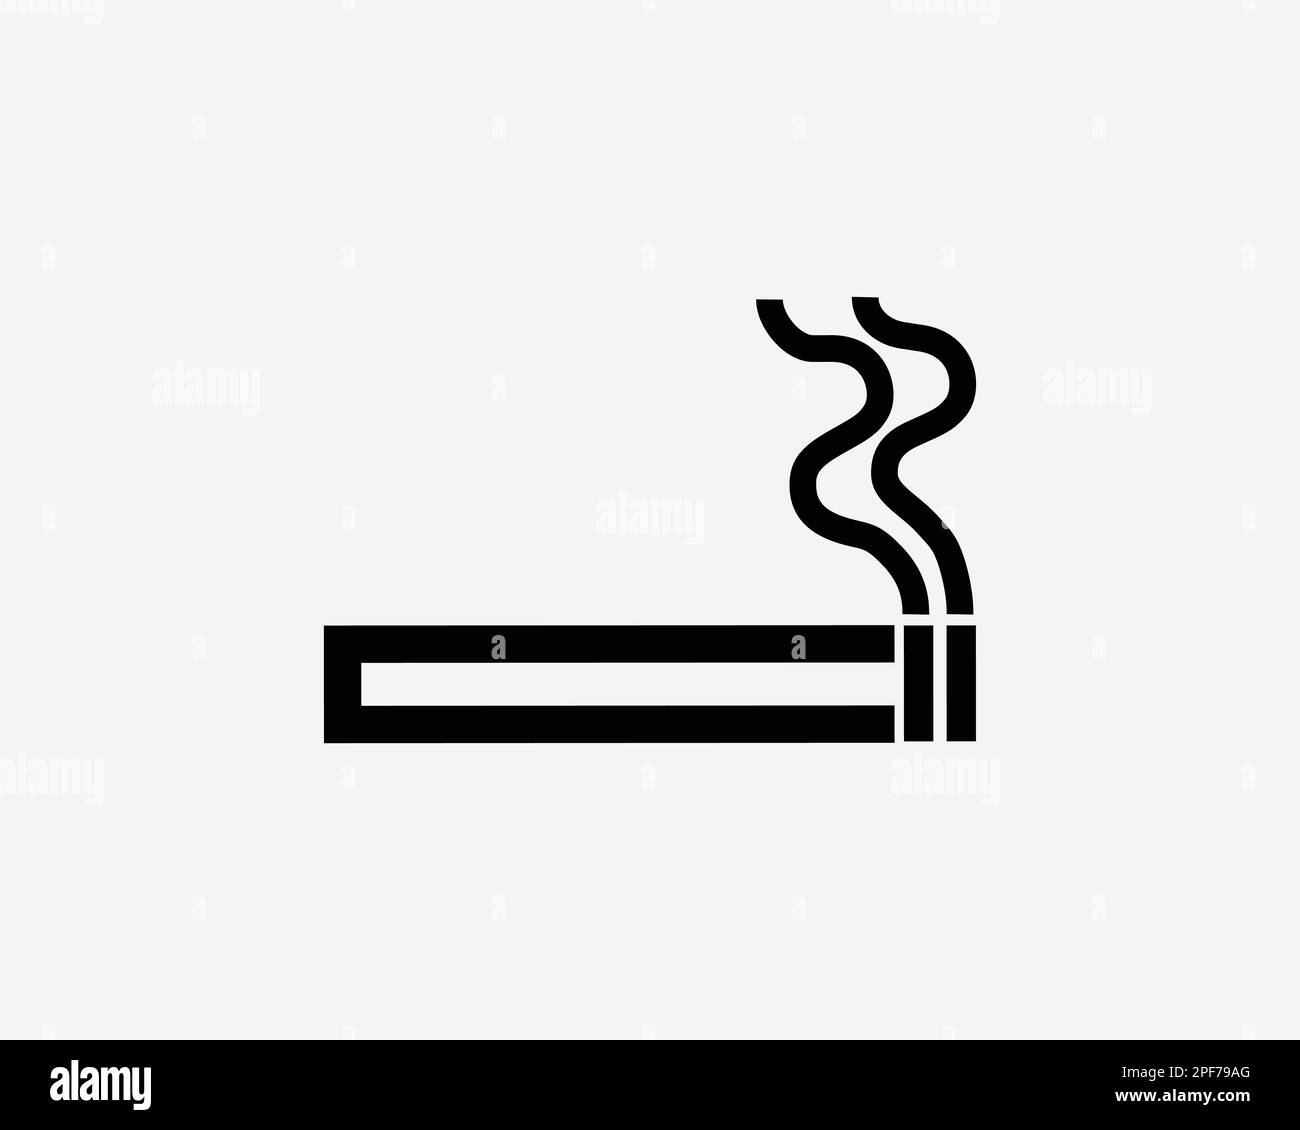 Cigarette Smoking Smoke Burn Burning Light Black White Silhouette Symbol Icon Line Outline Sign Graphic Clipart Artwork Illustration Pictogram Vector Stock Vector